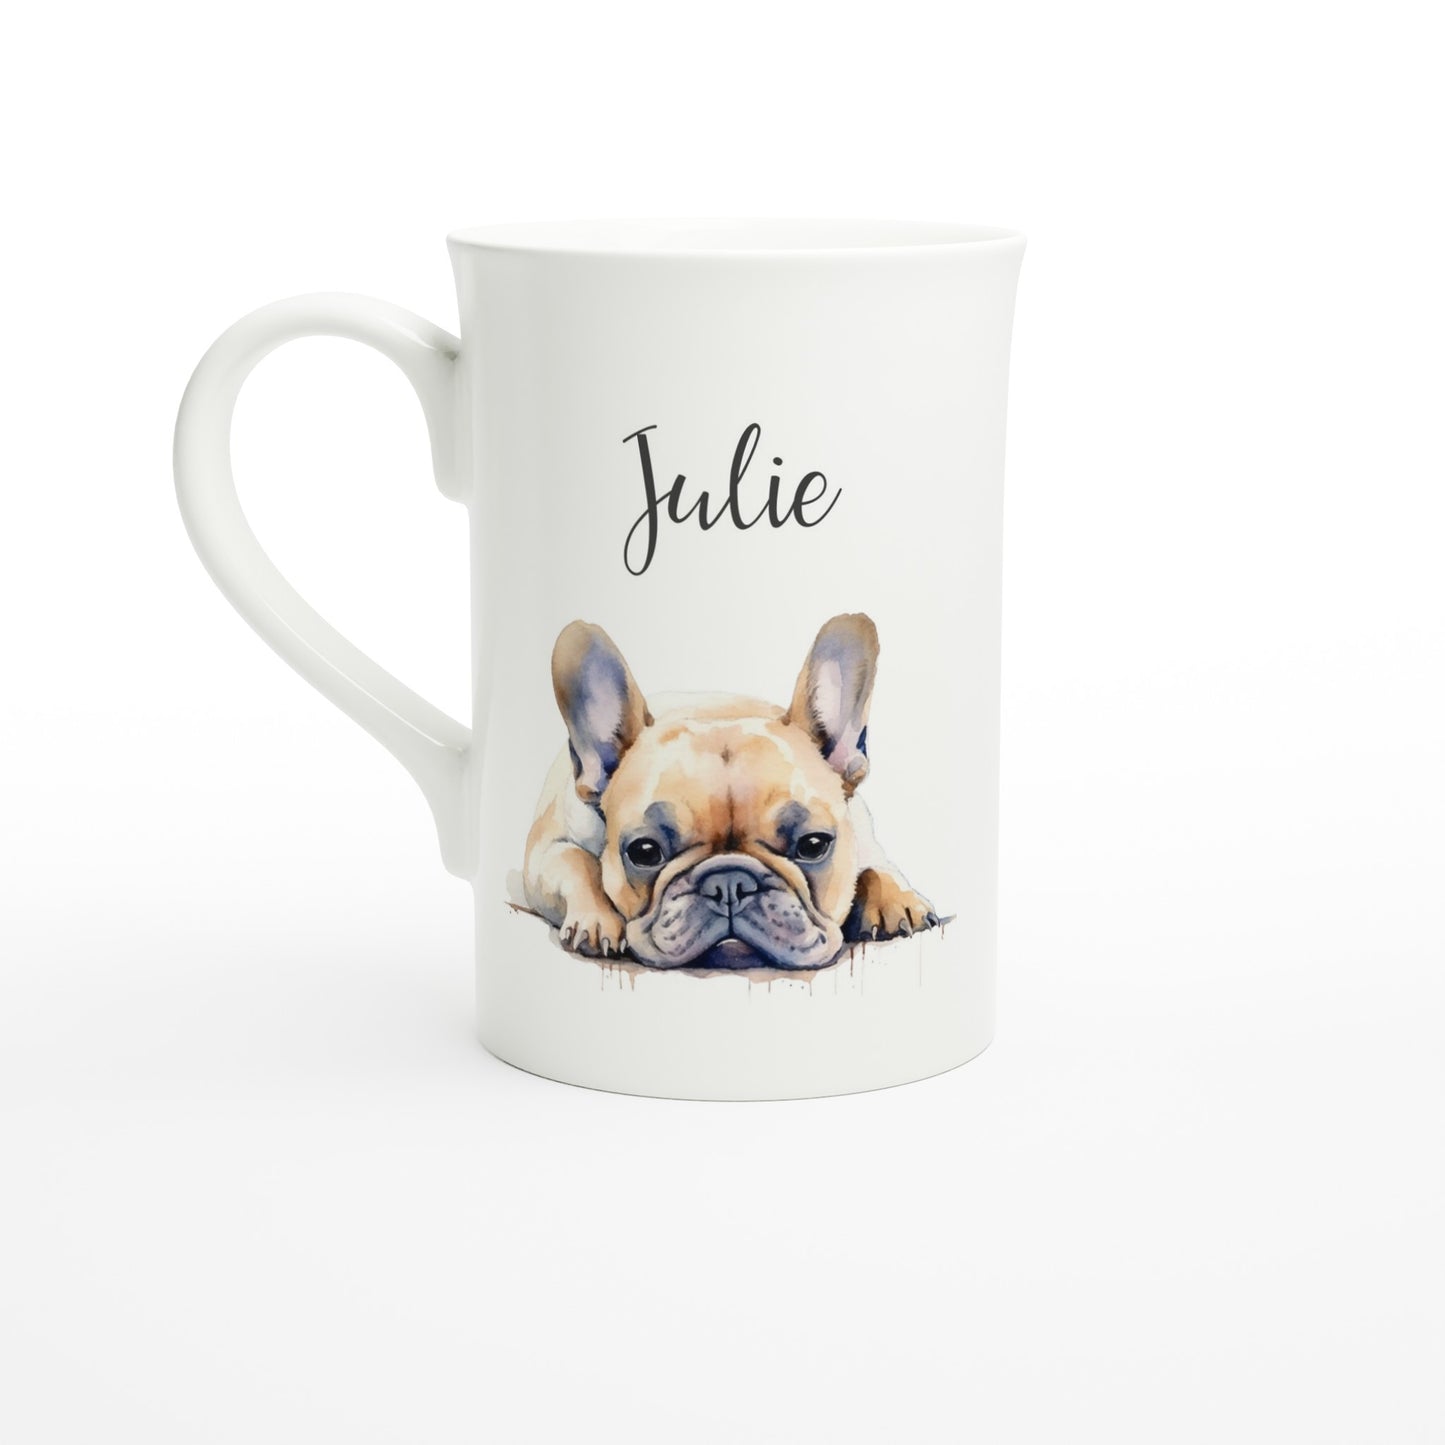 French bulldog porcelain mug